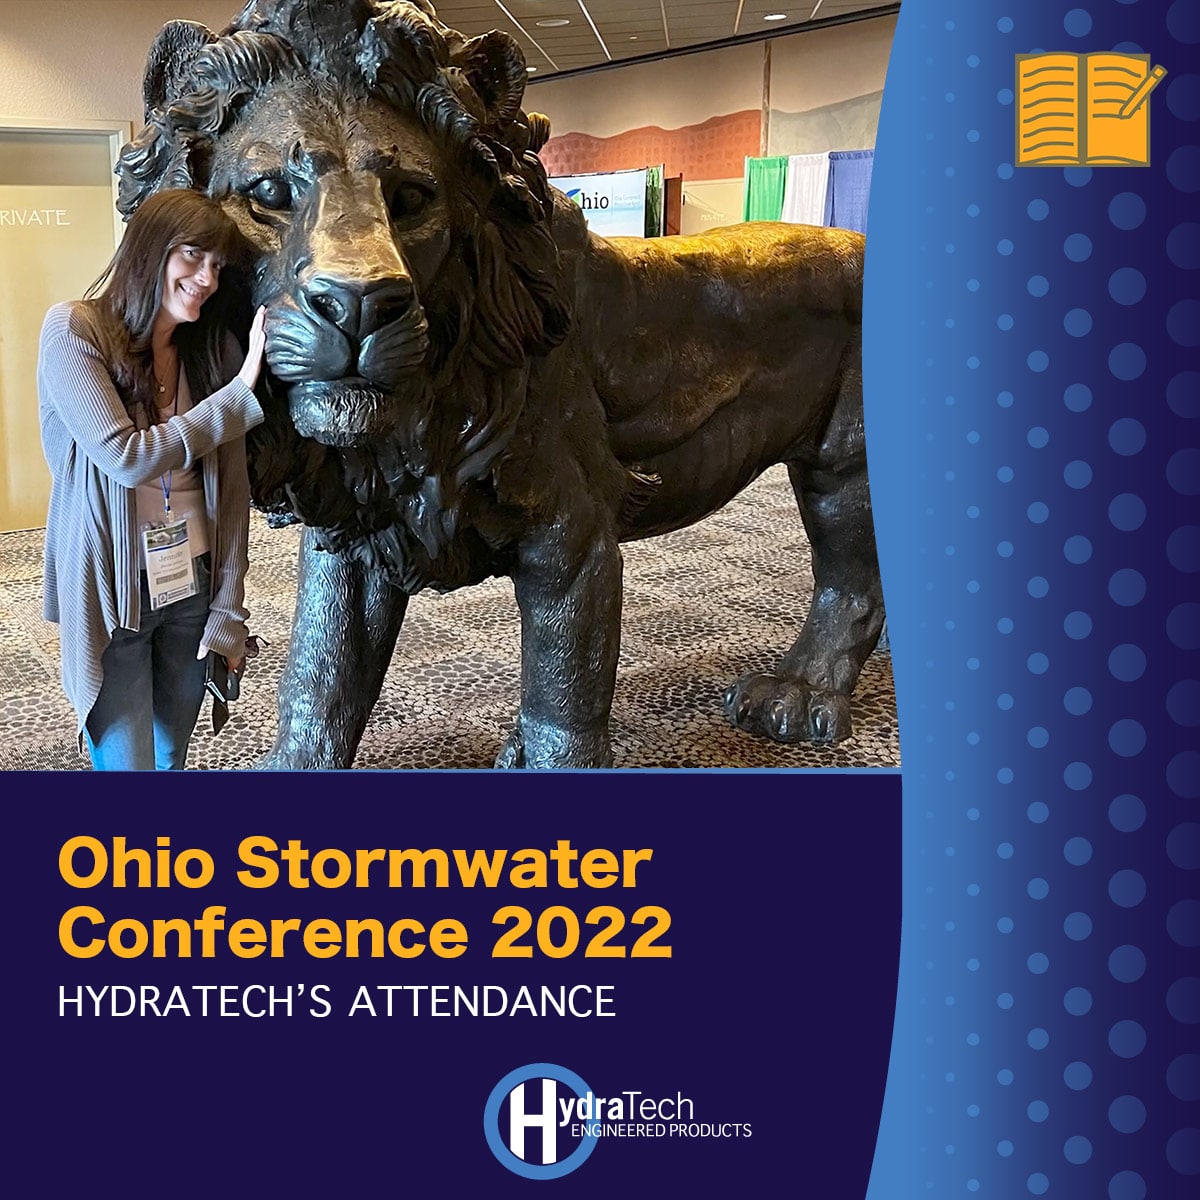 Jennifer standing near a metal lion, 'Ohio Stormwater Conference 2022, HydraTech's Attendance'